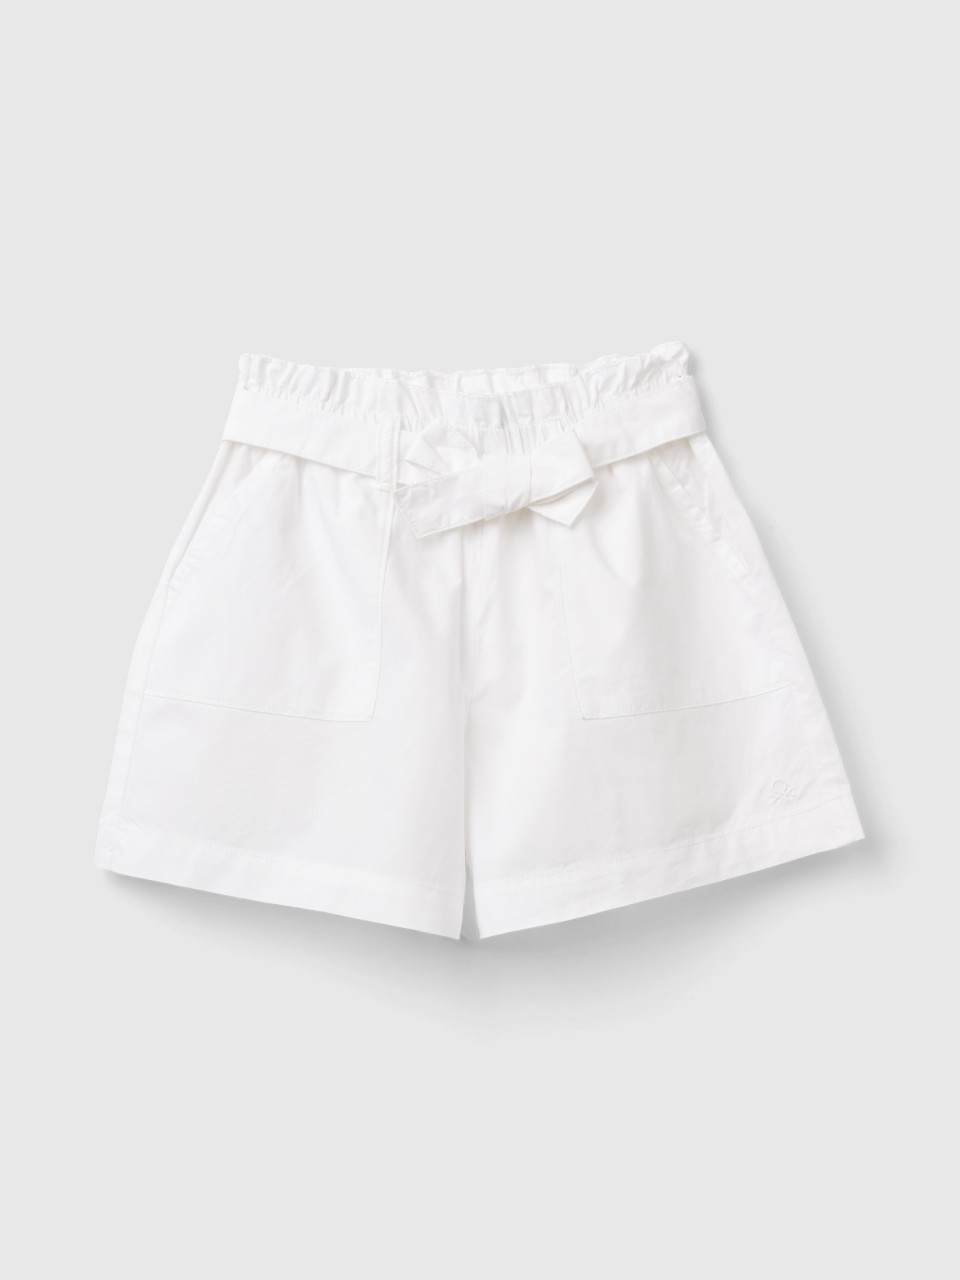 Benetton, Paperbag Shorts, White, Kids